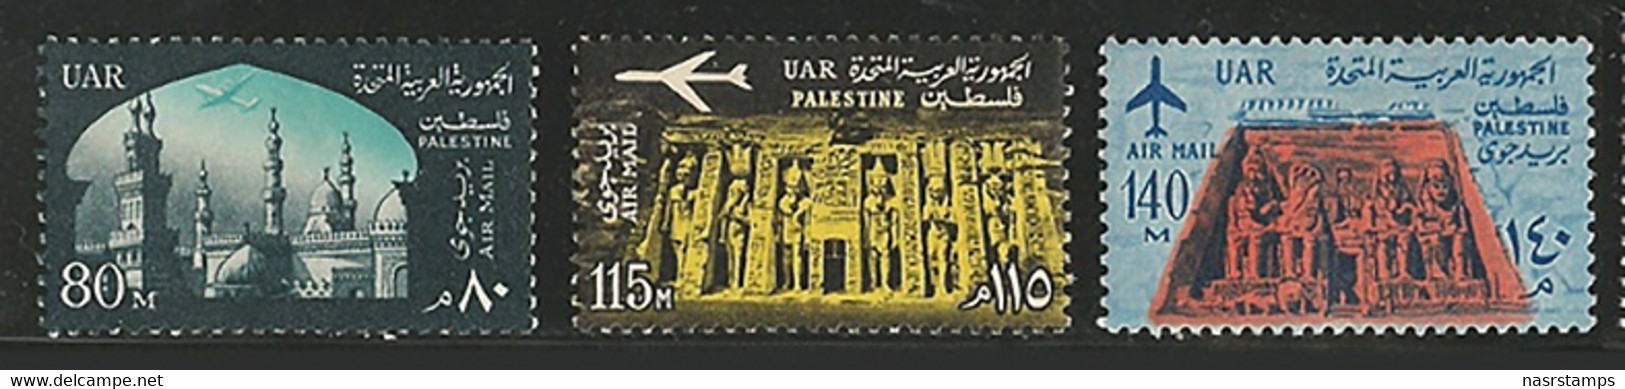 Egypt - 1963 - Palestine Issue - ( Temple Of Queen Nefertari, Abu Simbel ) - MNH (**) - Aegyptologie